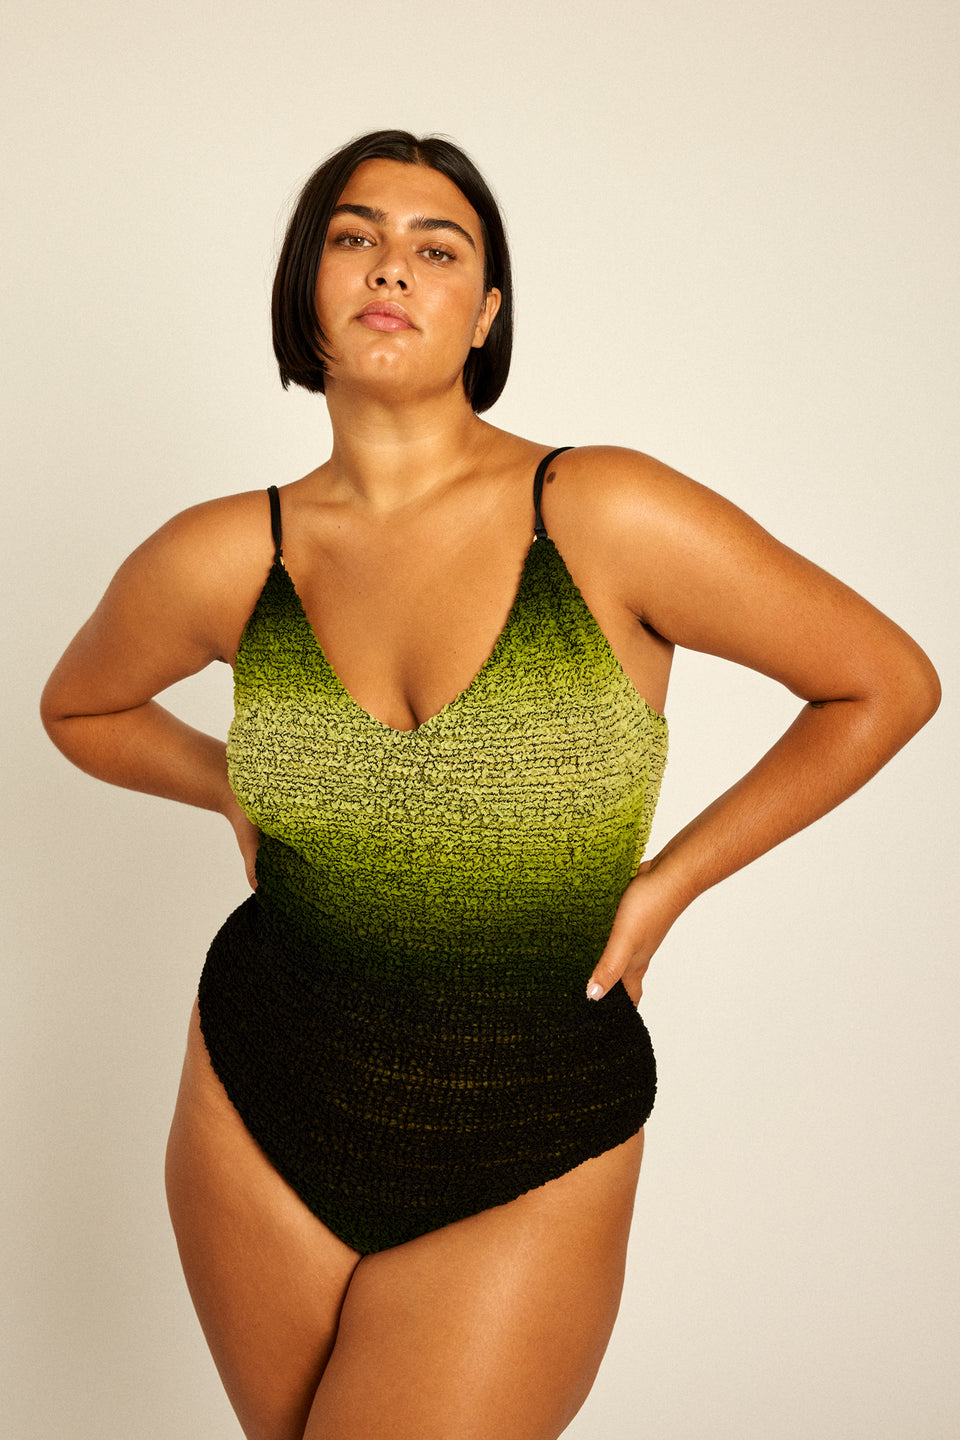 Great flattering fit silk swimsuit worn as top by plus size XL beautiful curvy model.